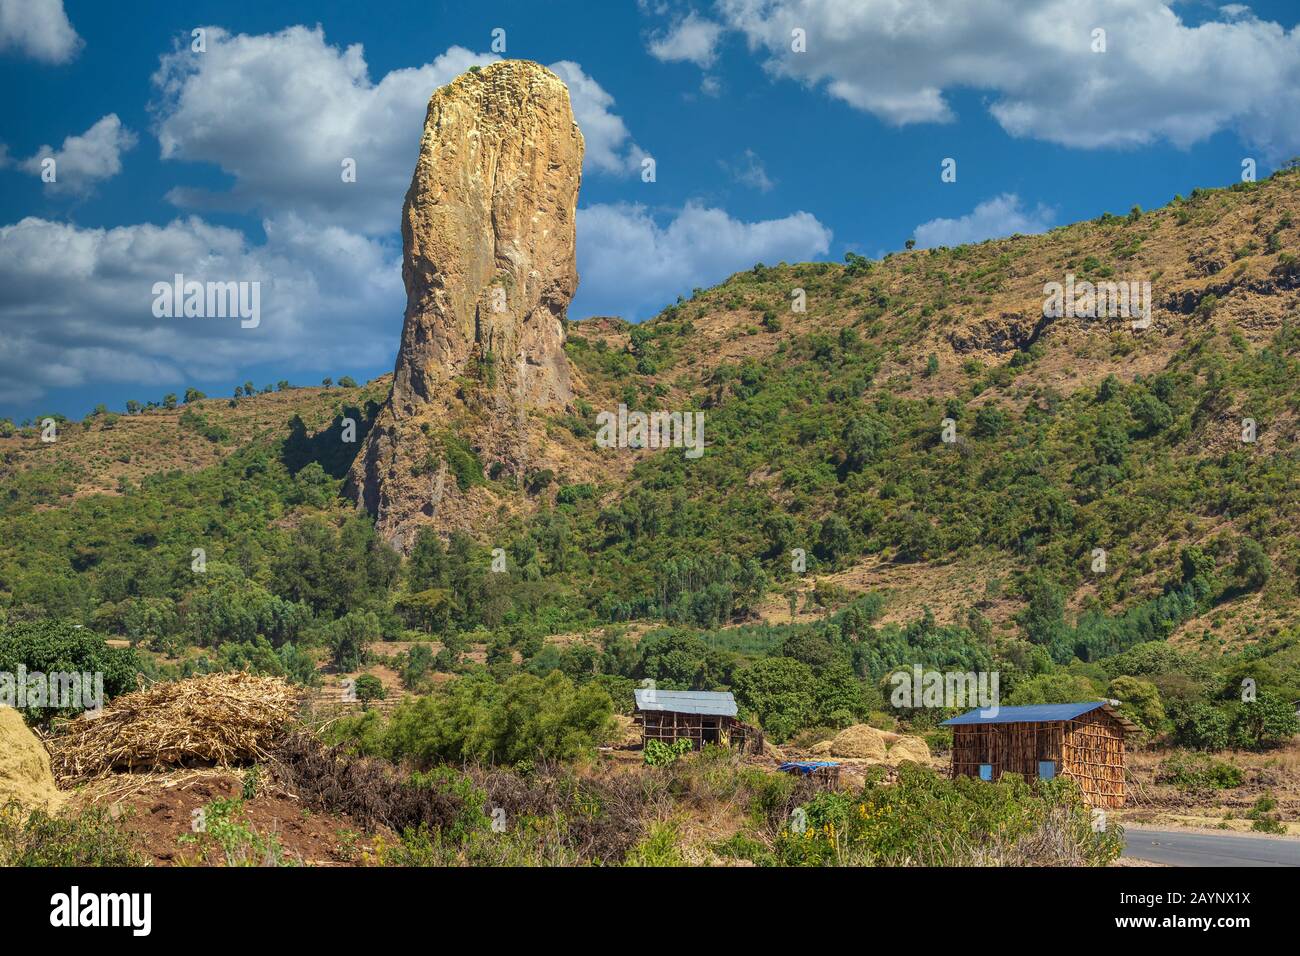 The Devil's Nose Rock in Ethiopia Stock Photo